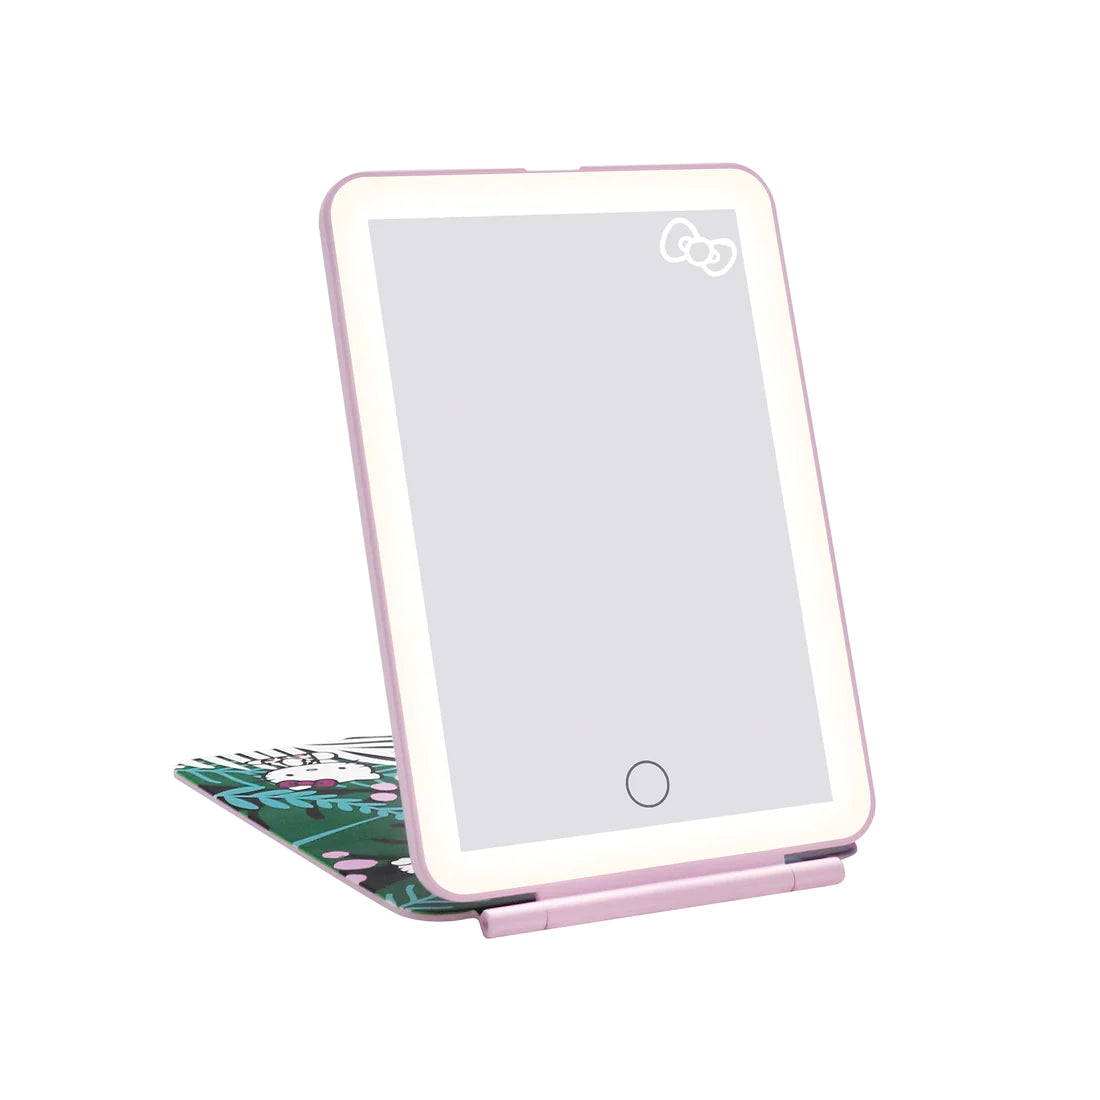 Impressions Vanity - Hello Kitty Touch Pad Mini Tri-Tone LED Makeup Mirror Animal